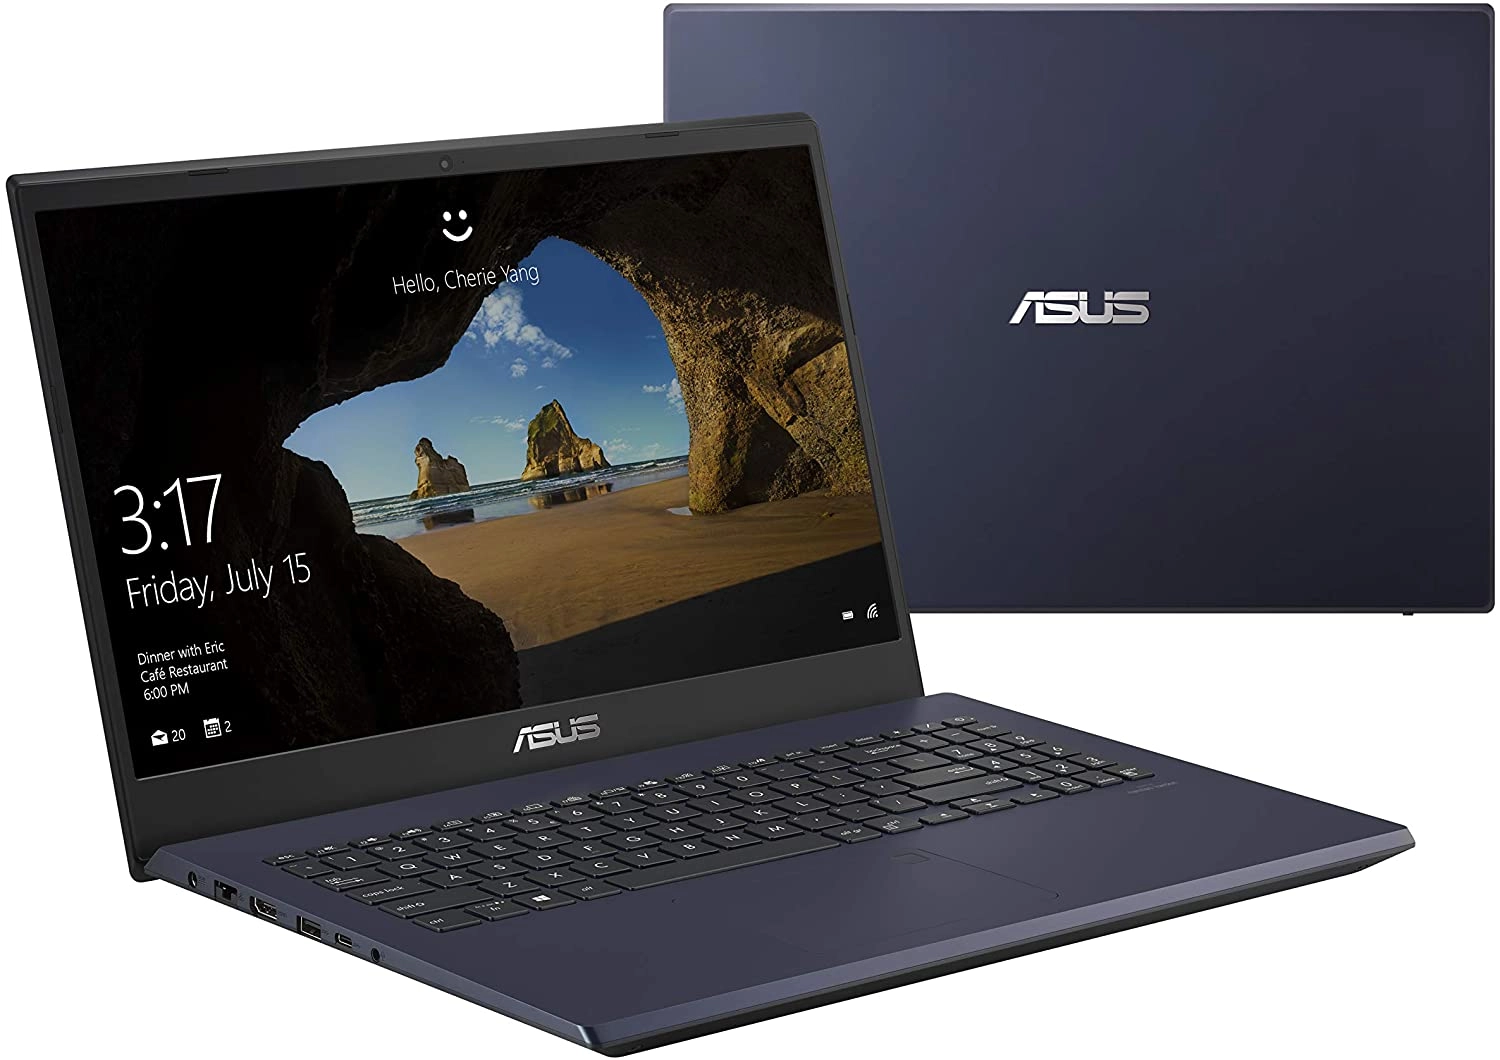 Asus VivoBook K571 laptop image